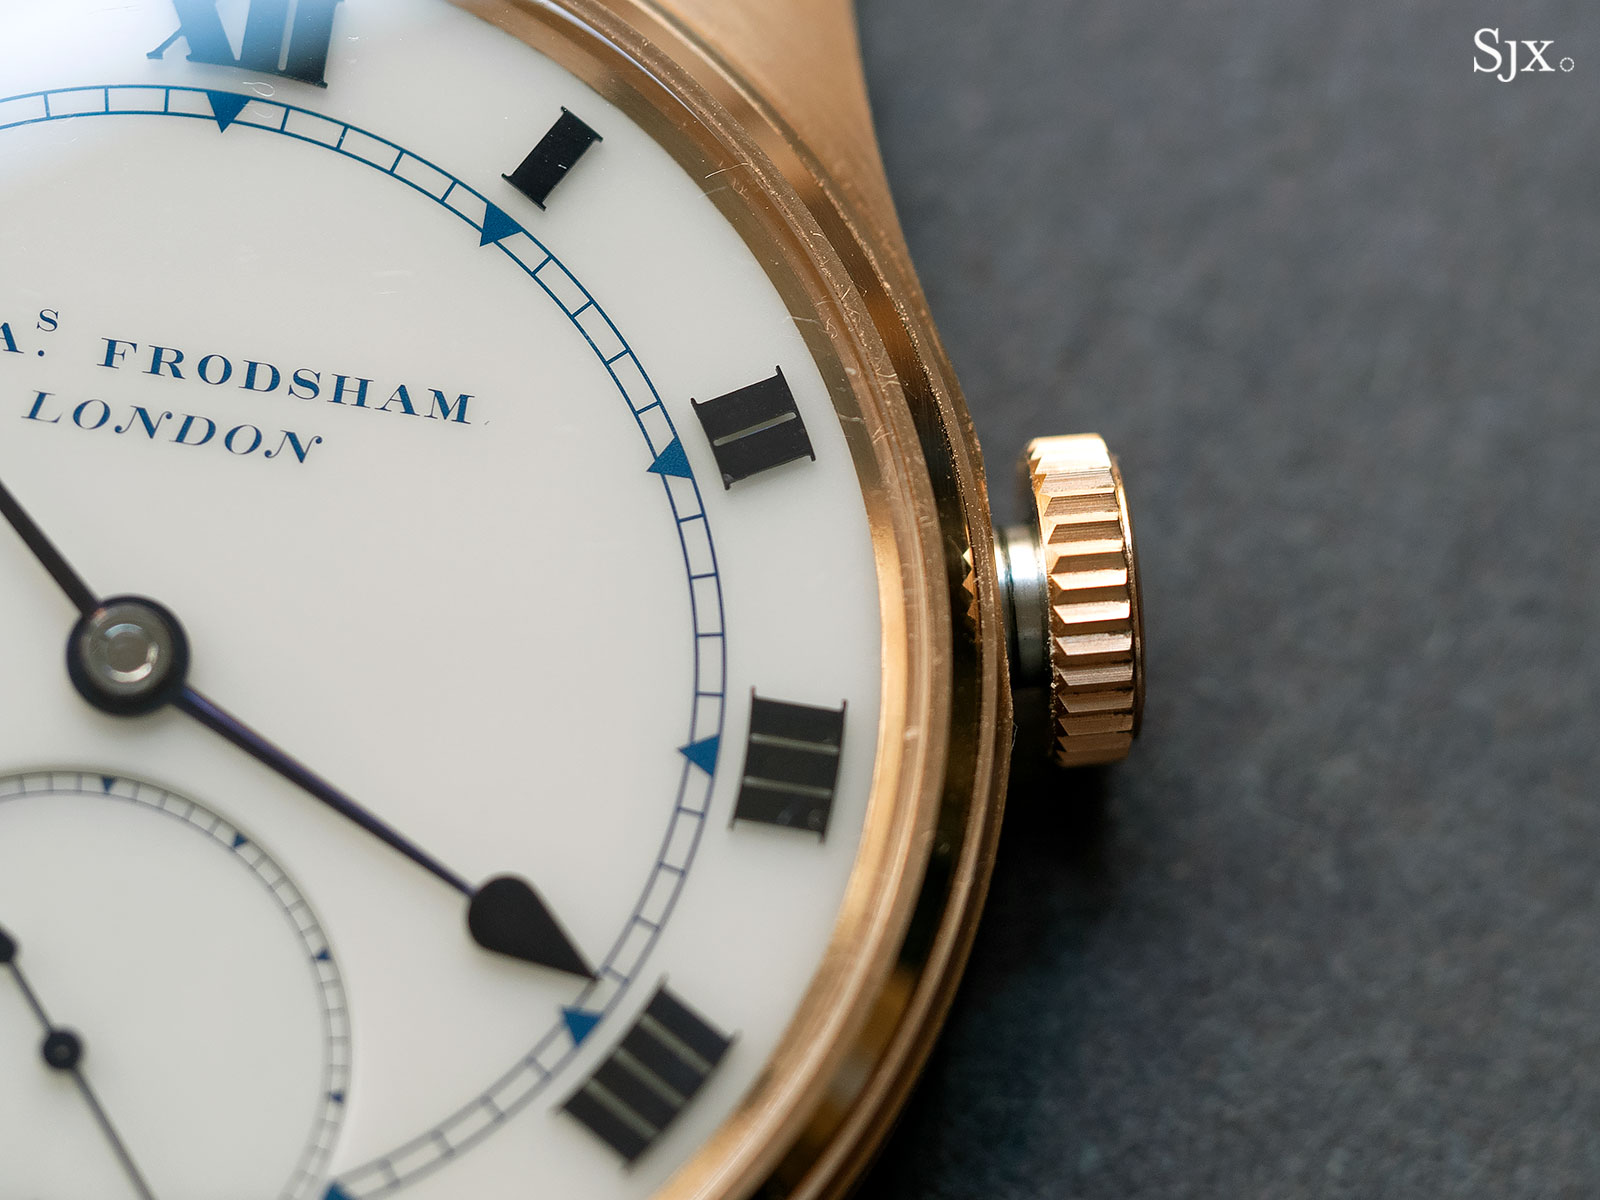 Frodsham Double Impulse chronometer rose gold 6